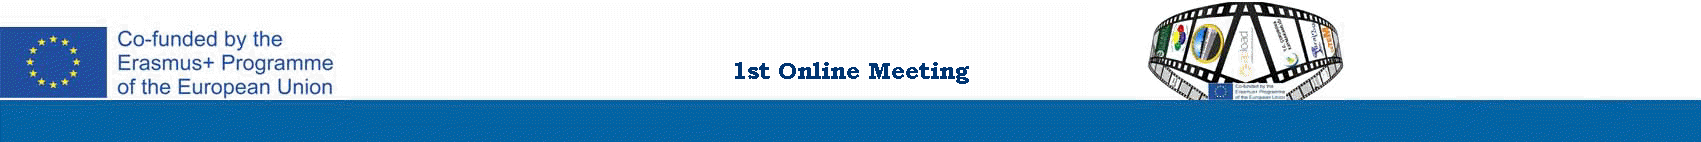 1st Online Meeting